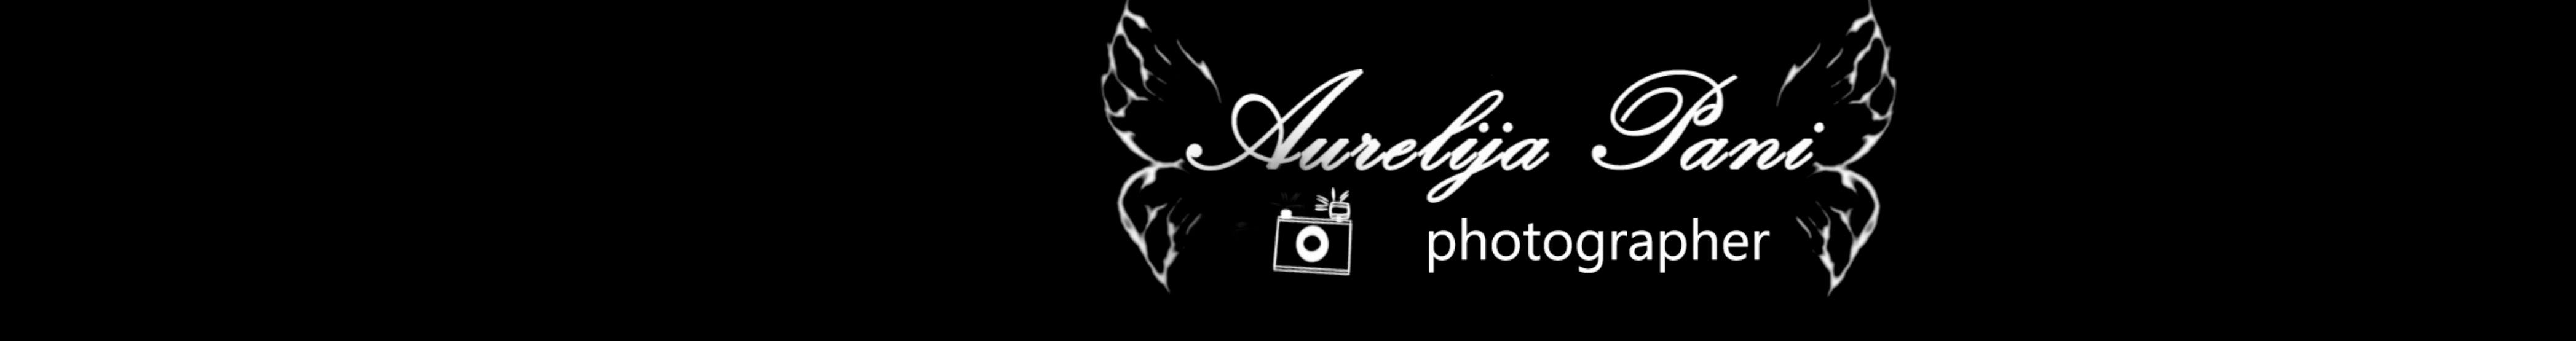 Aureli Pani's profile banner